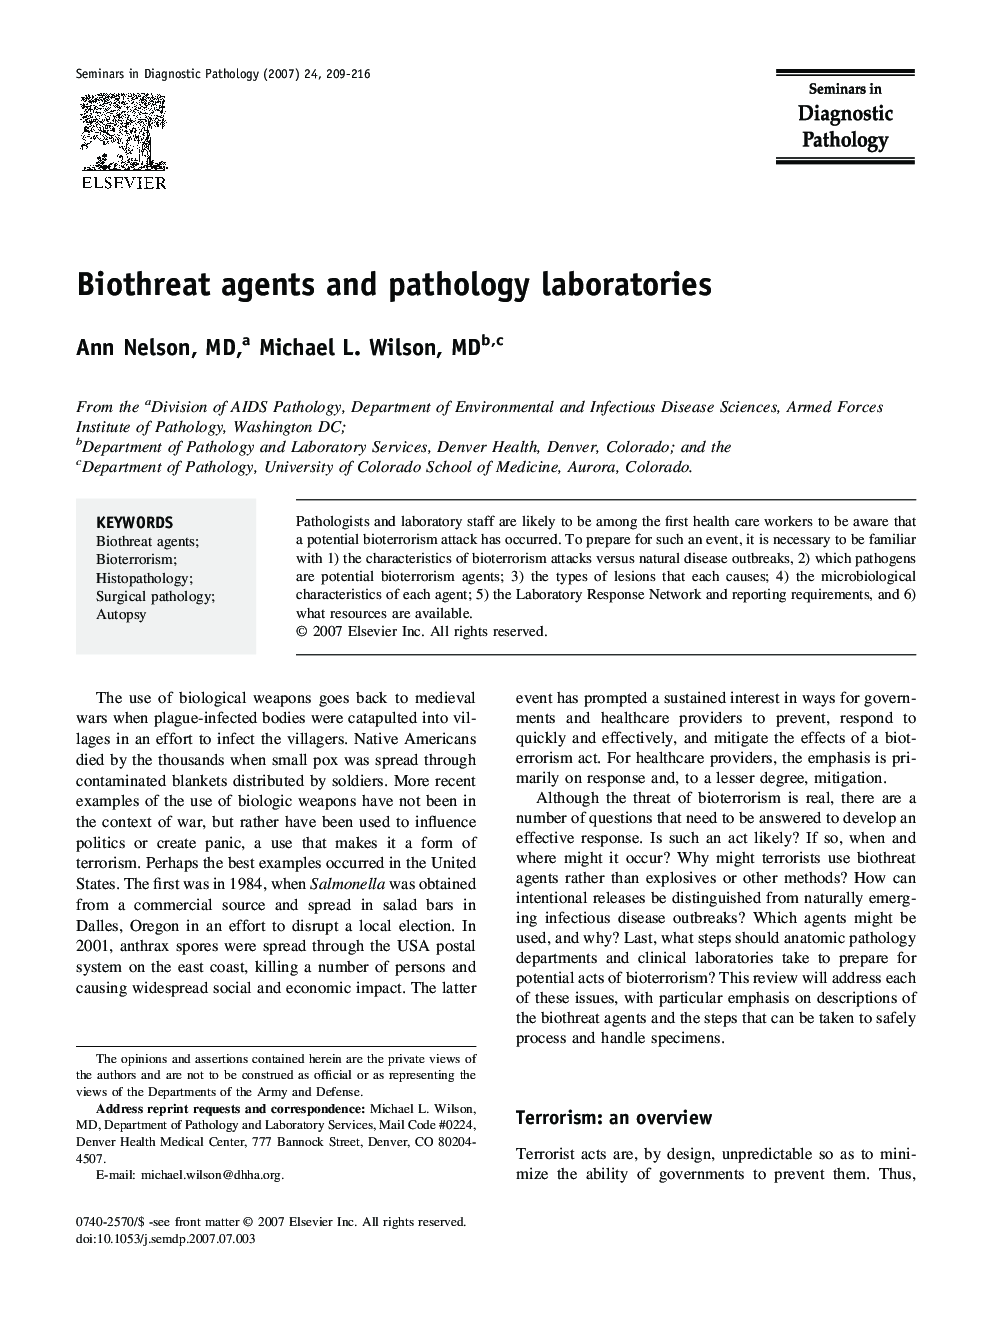 Biothreat agents and pathology laboratories